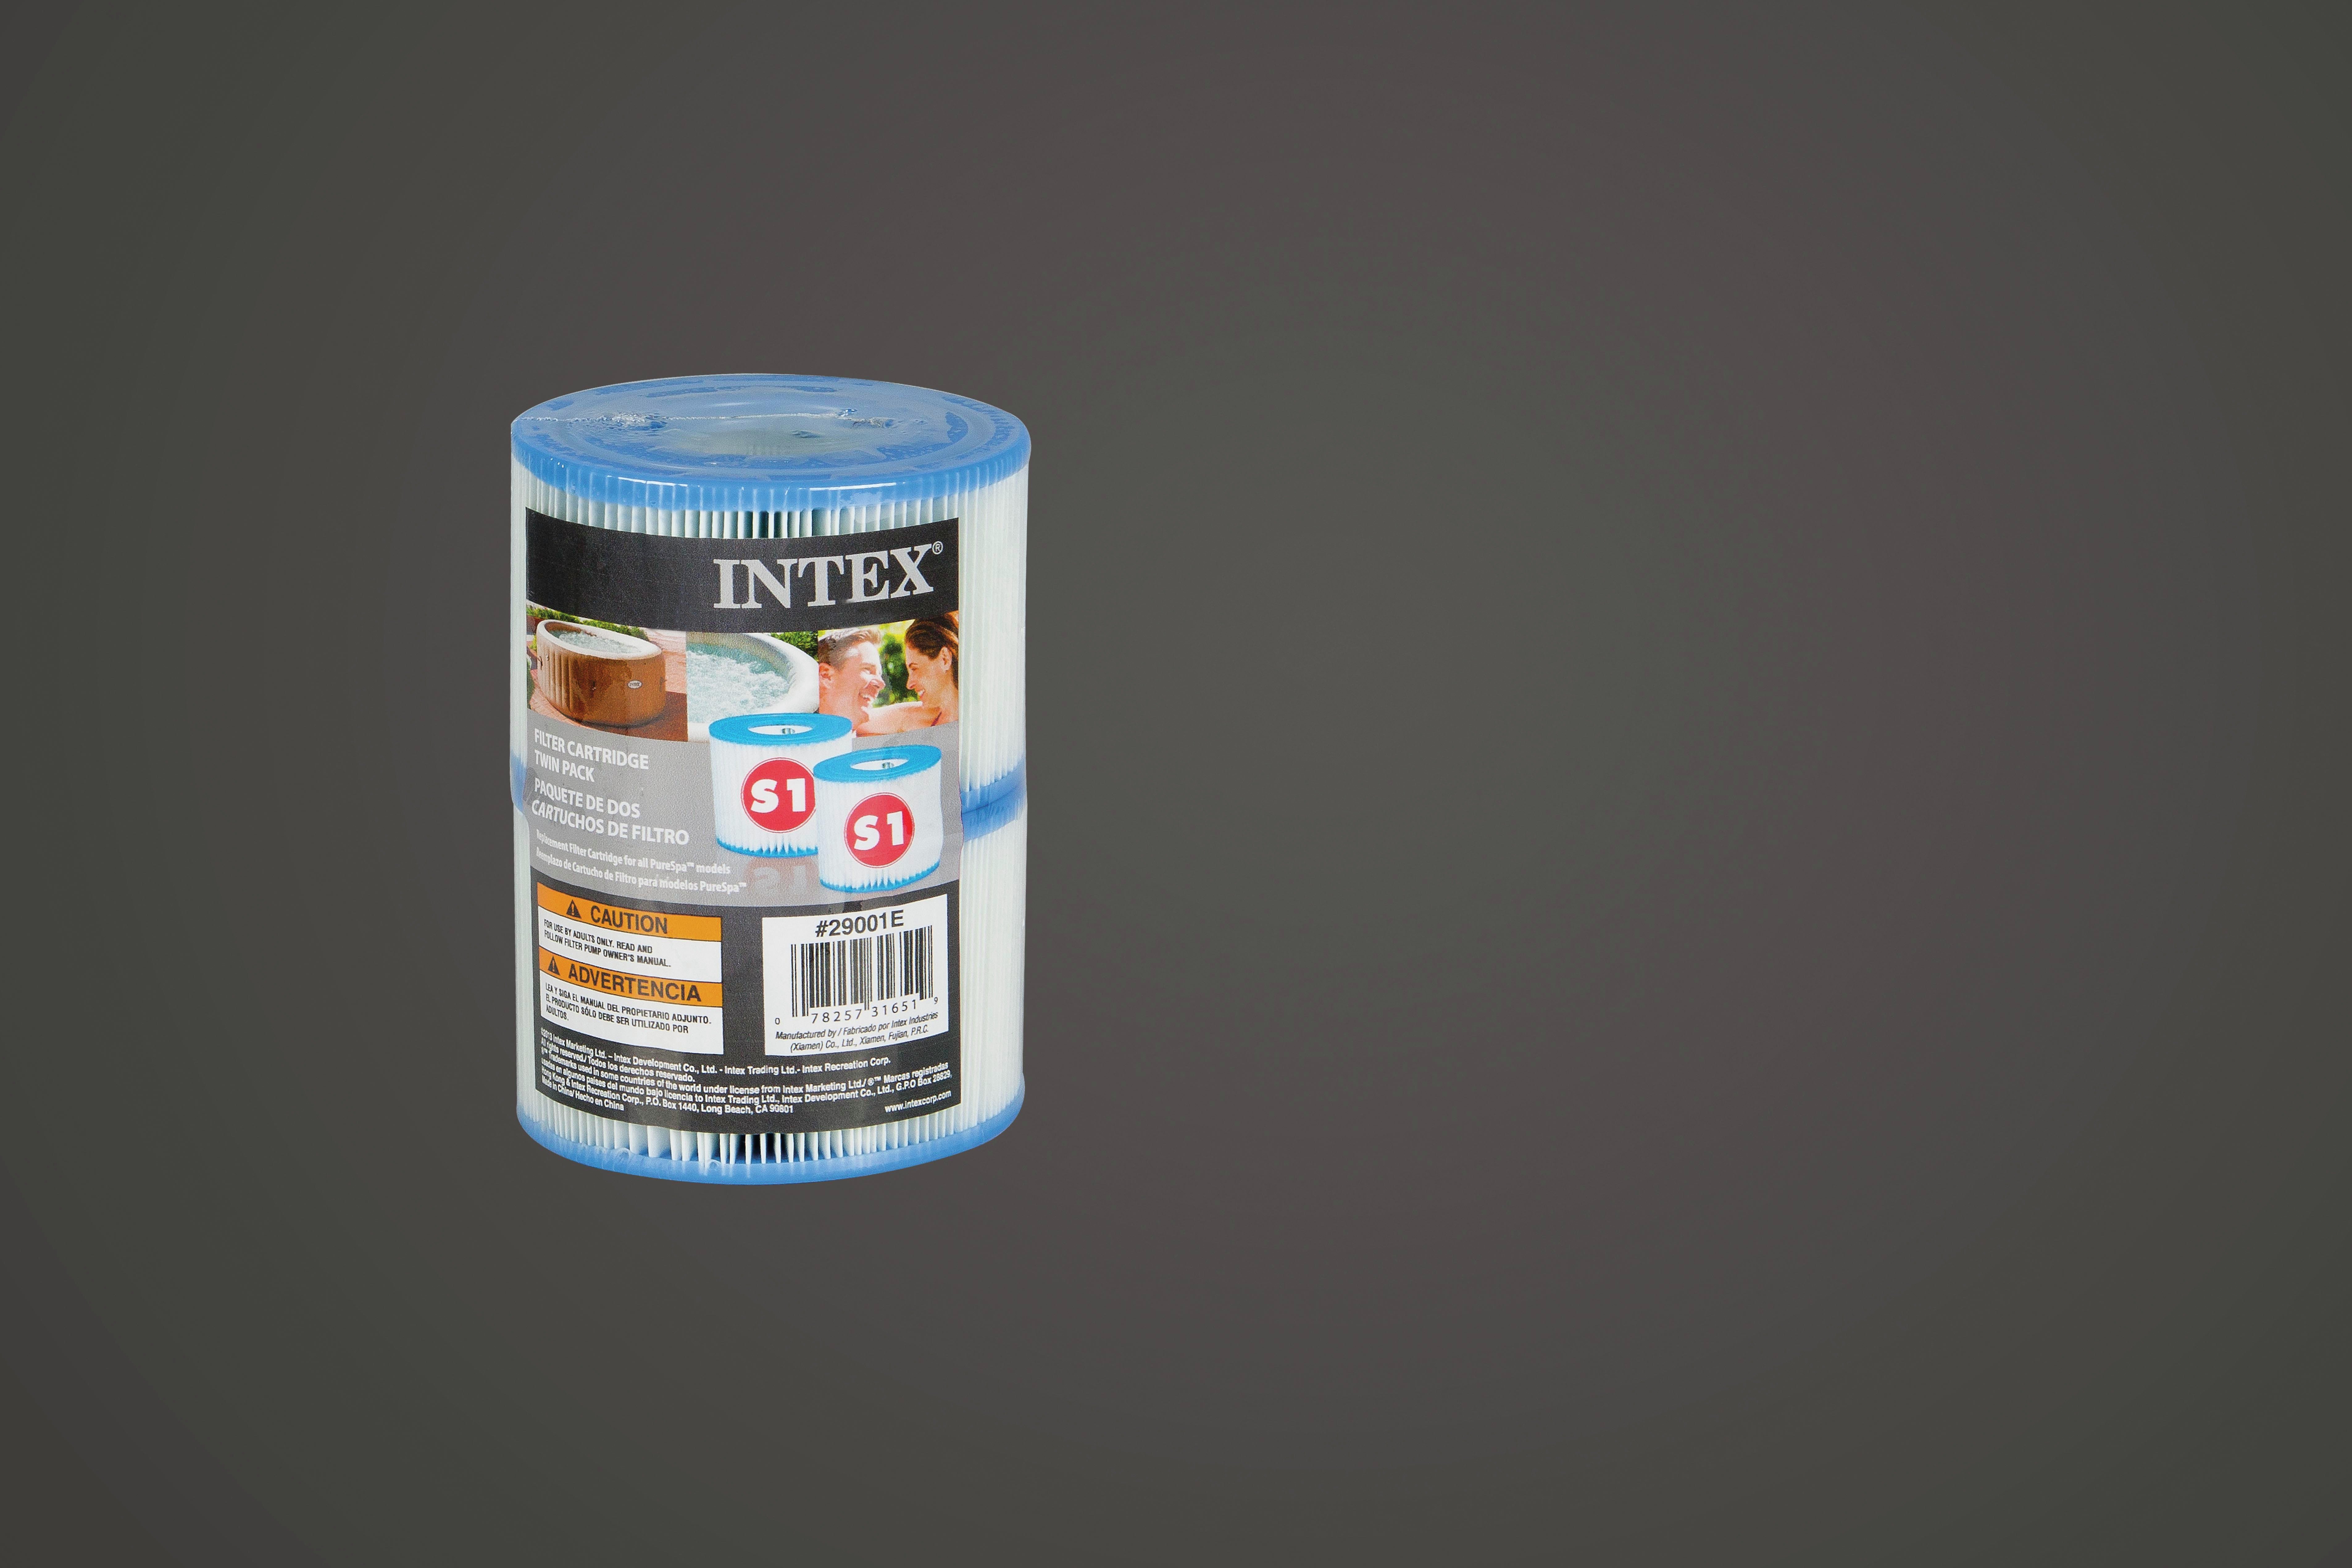 Intex Pure Spa Filter Cartridge Twin Pack